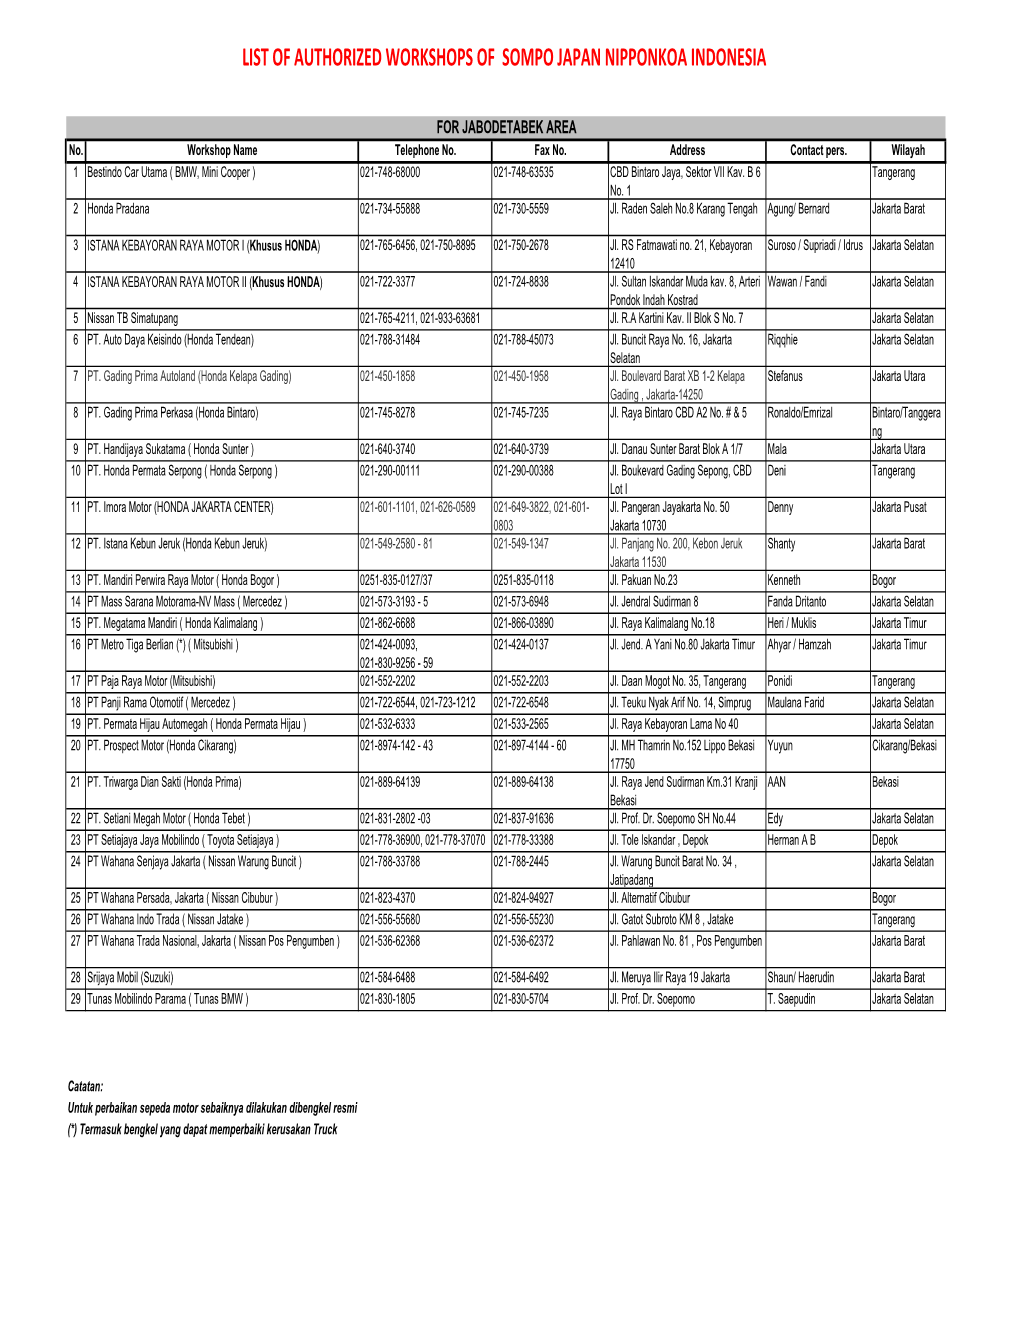 List of Authorized Workshops of Sompo Japan Nipponkoa Indonesia